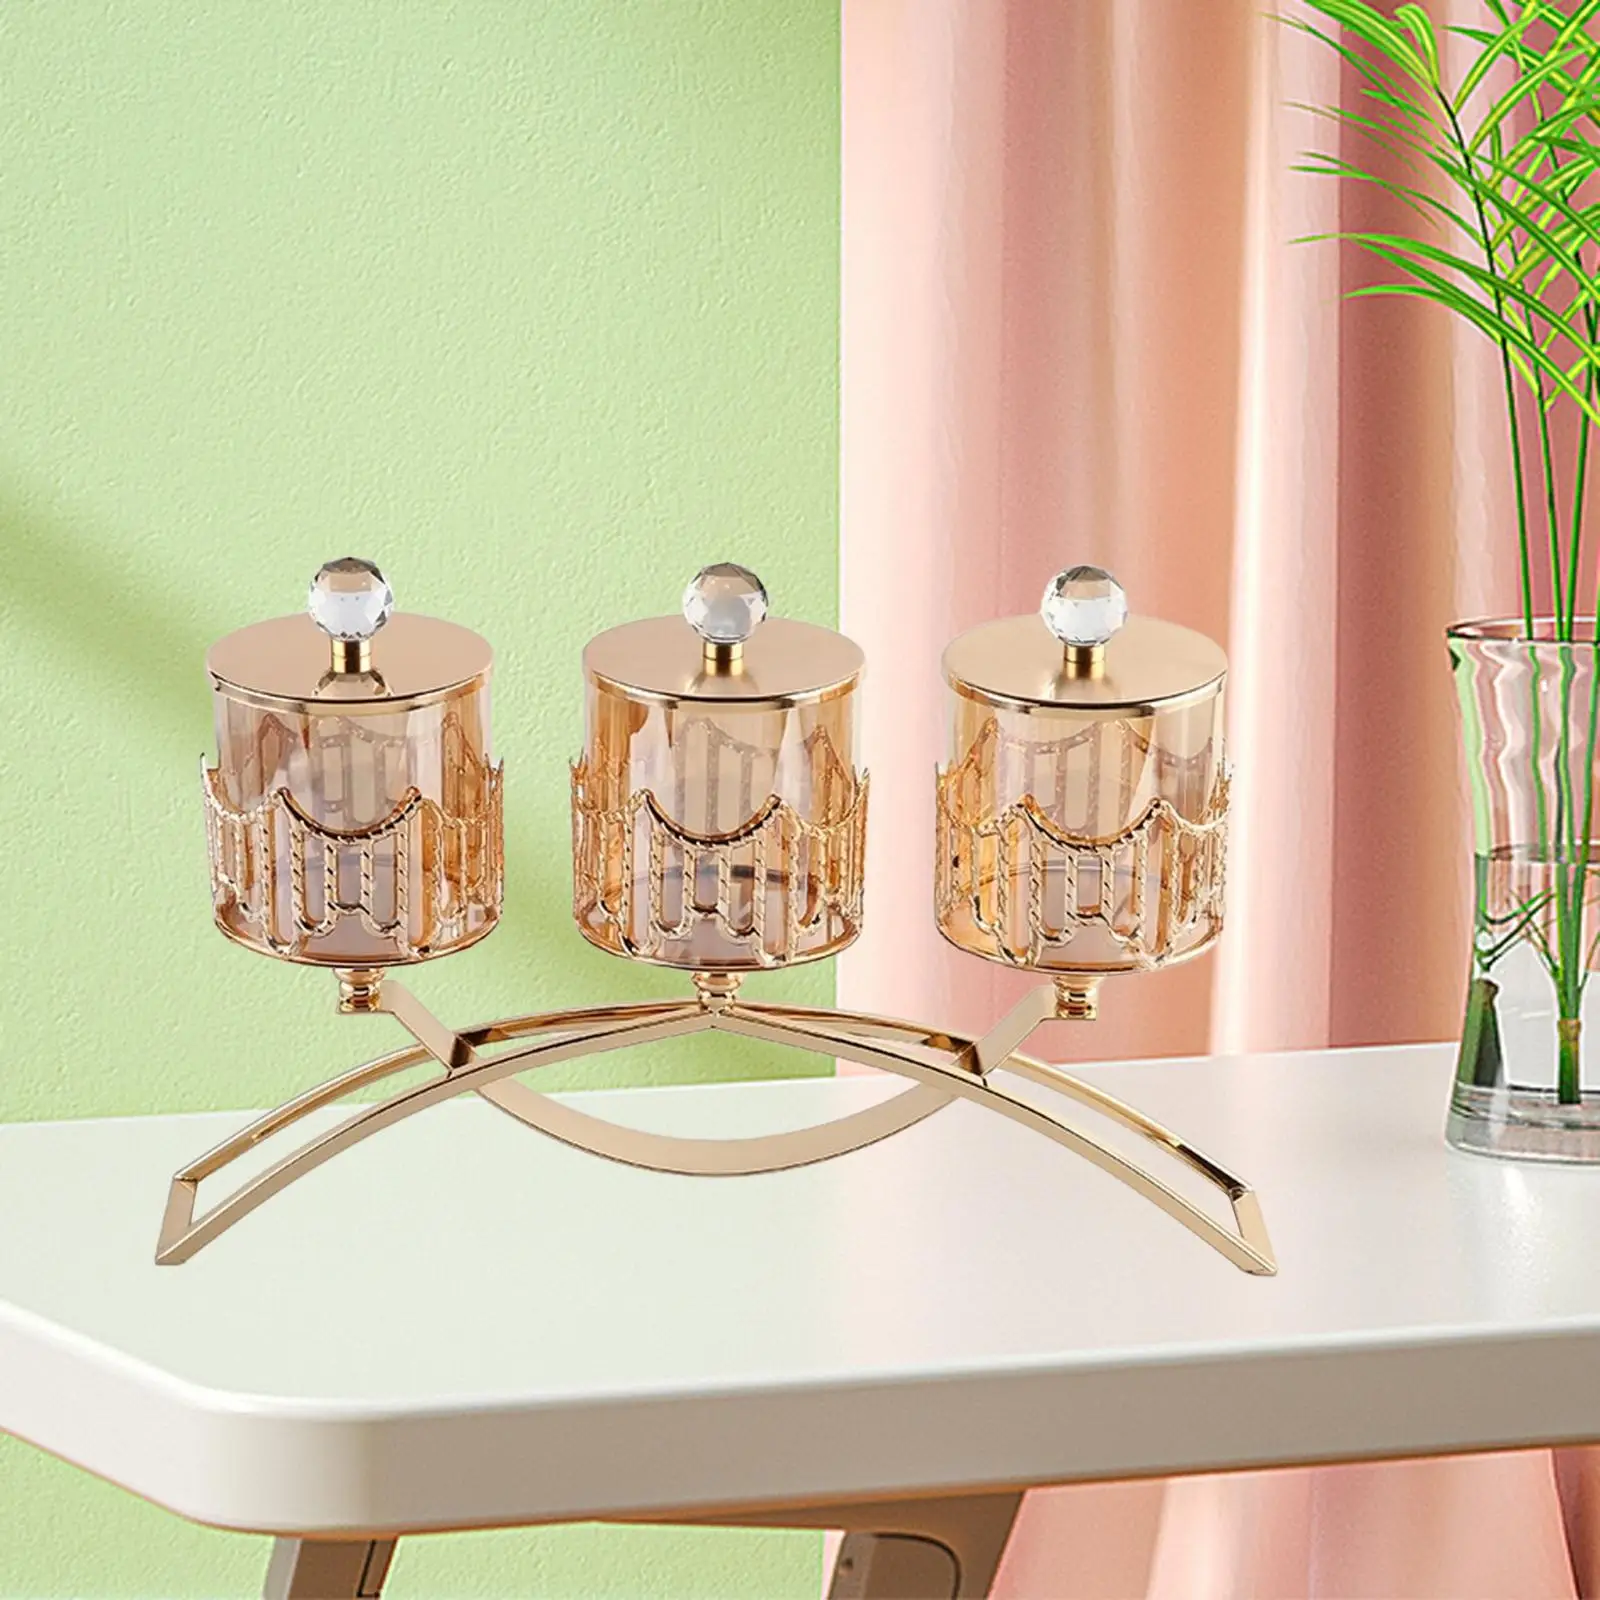 Tea Light Candlestick Holder 3 Arms Candelabra Decorative Table Candle Holder